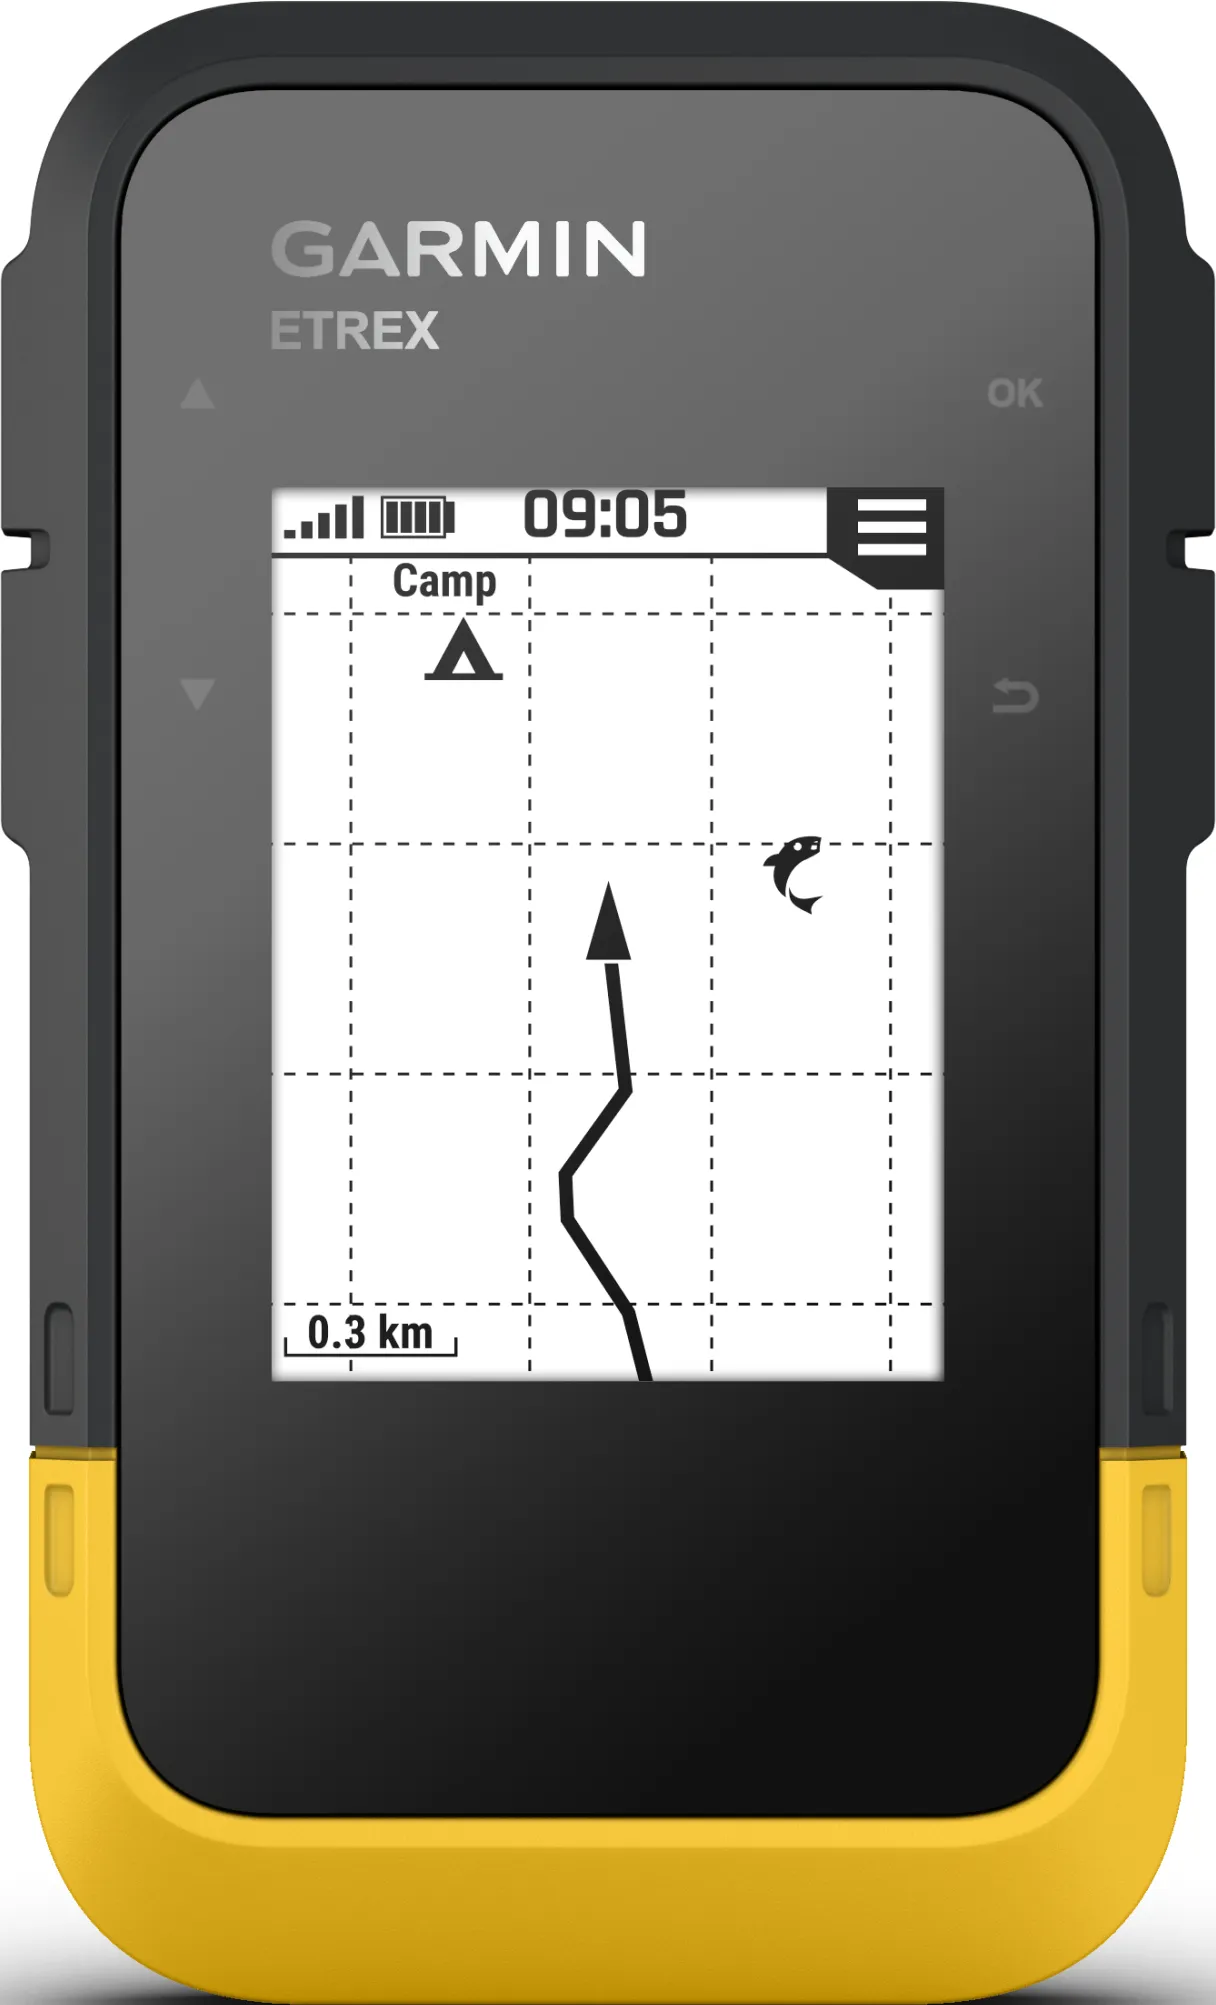 Garmin eTrex SE Navigationsgerät